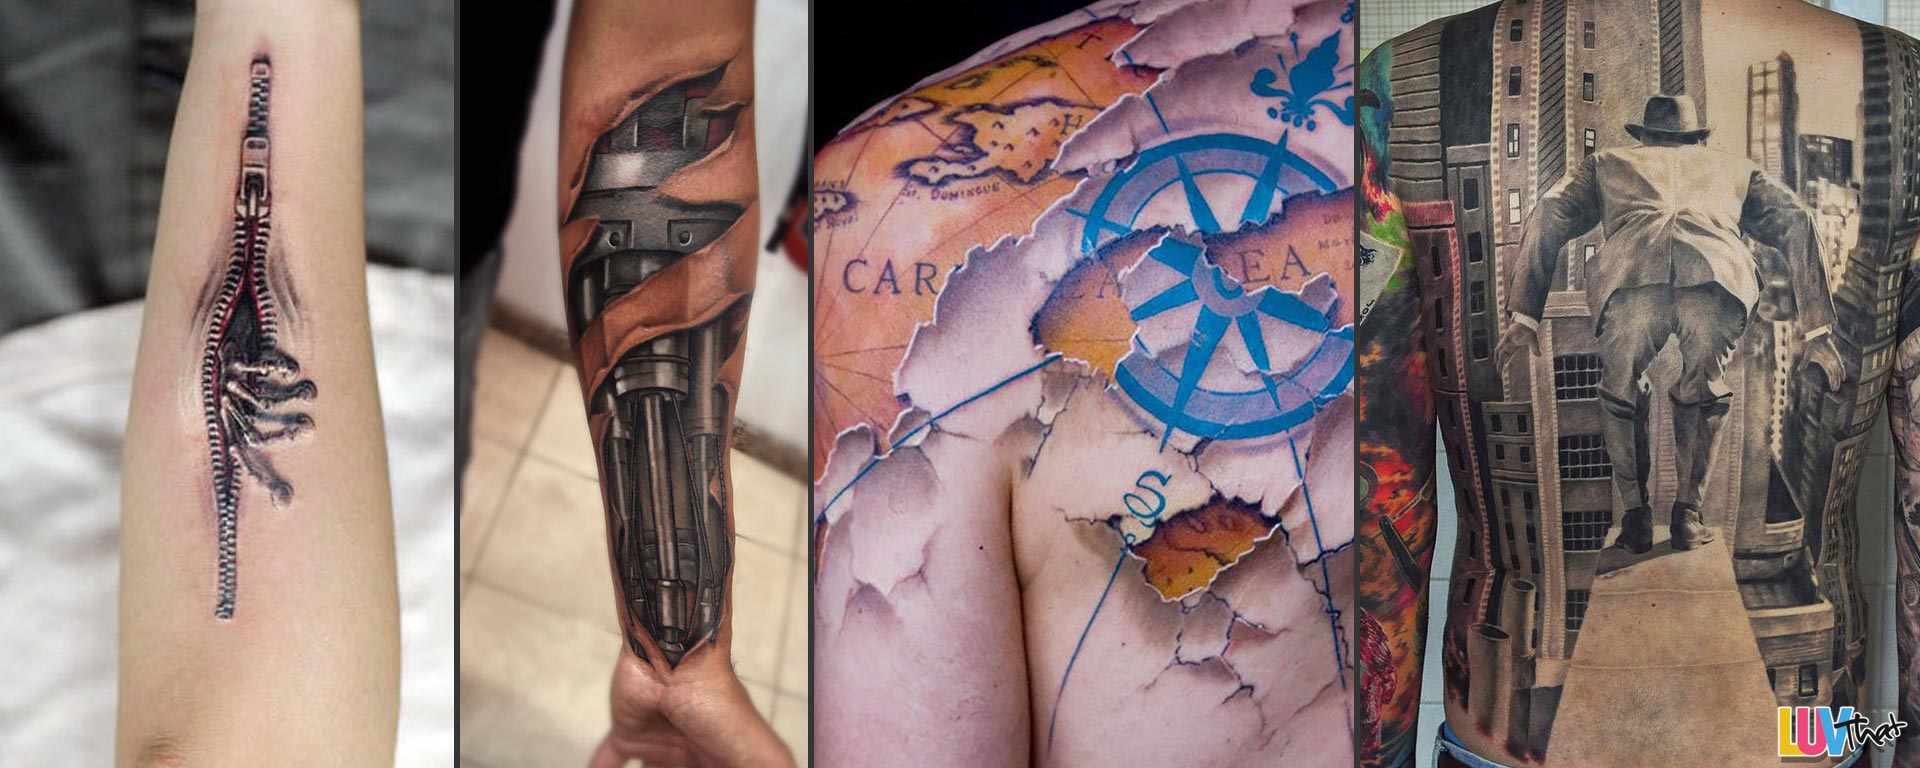 Cool tattoo illusion | Optical illusion tattoo, Tattoos for guys, Tattoos